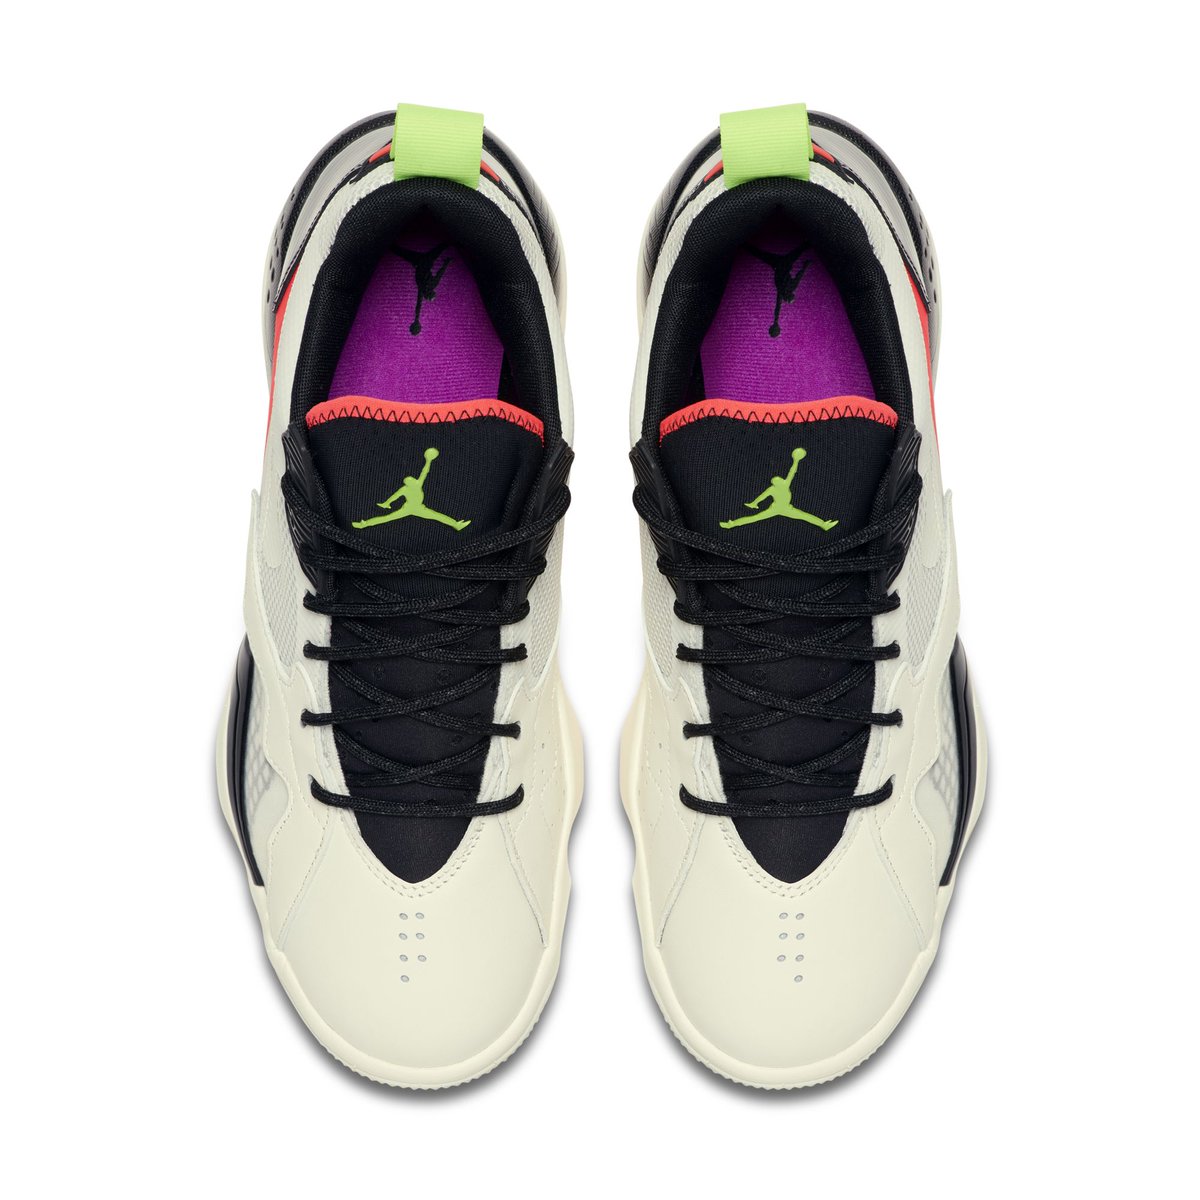 Jordan Nike AO2918 001 Kyrie 5 Rainbow Soles Amazon.in